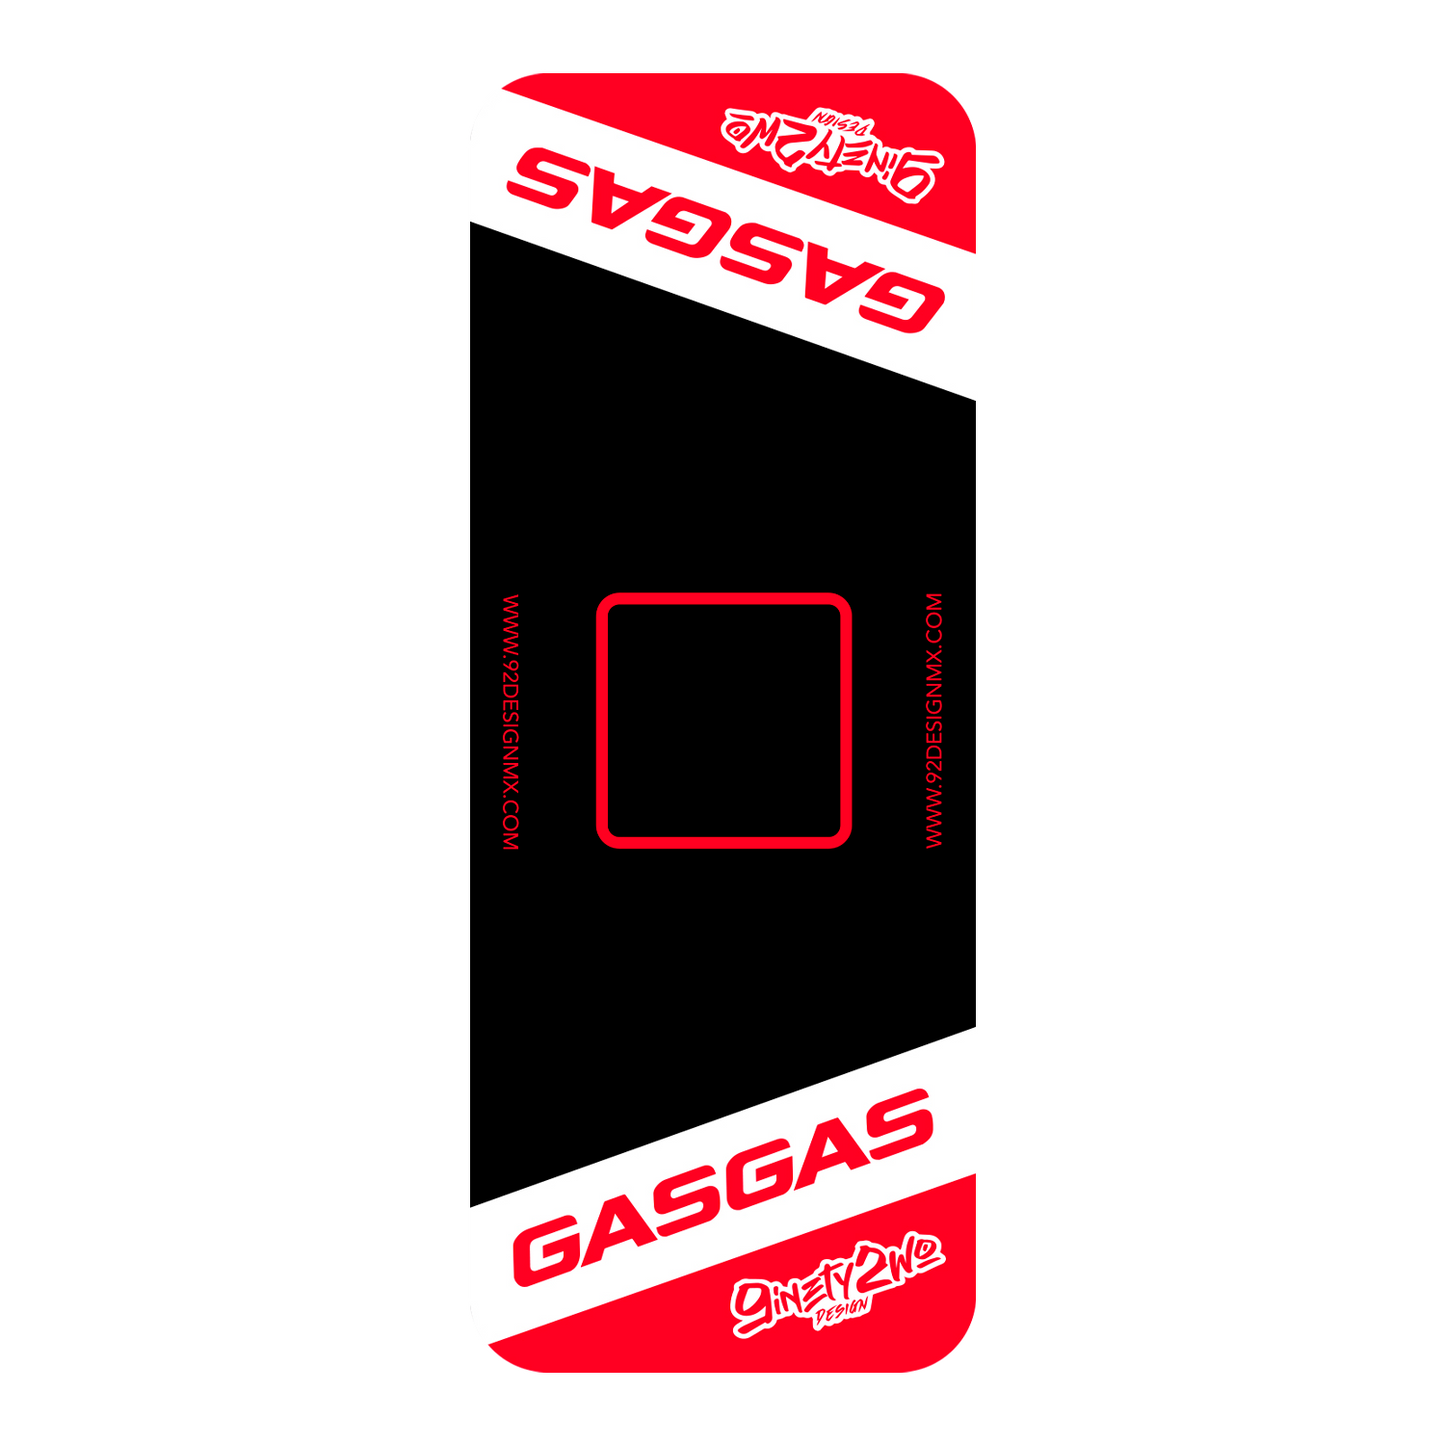 GASGAS RACE